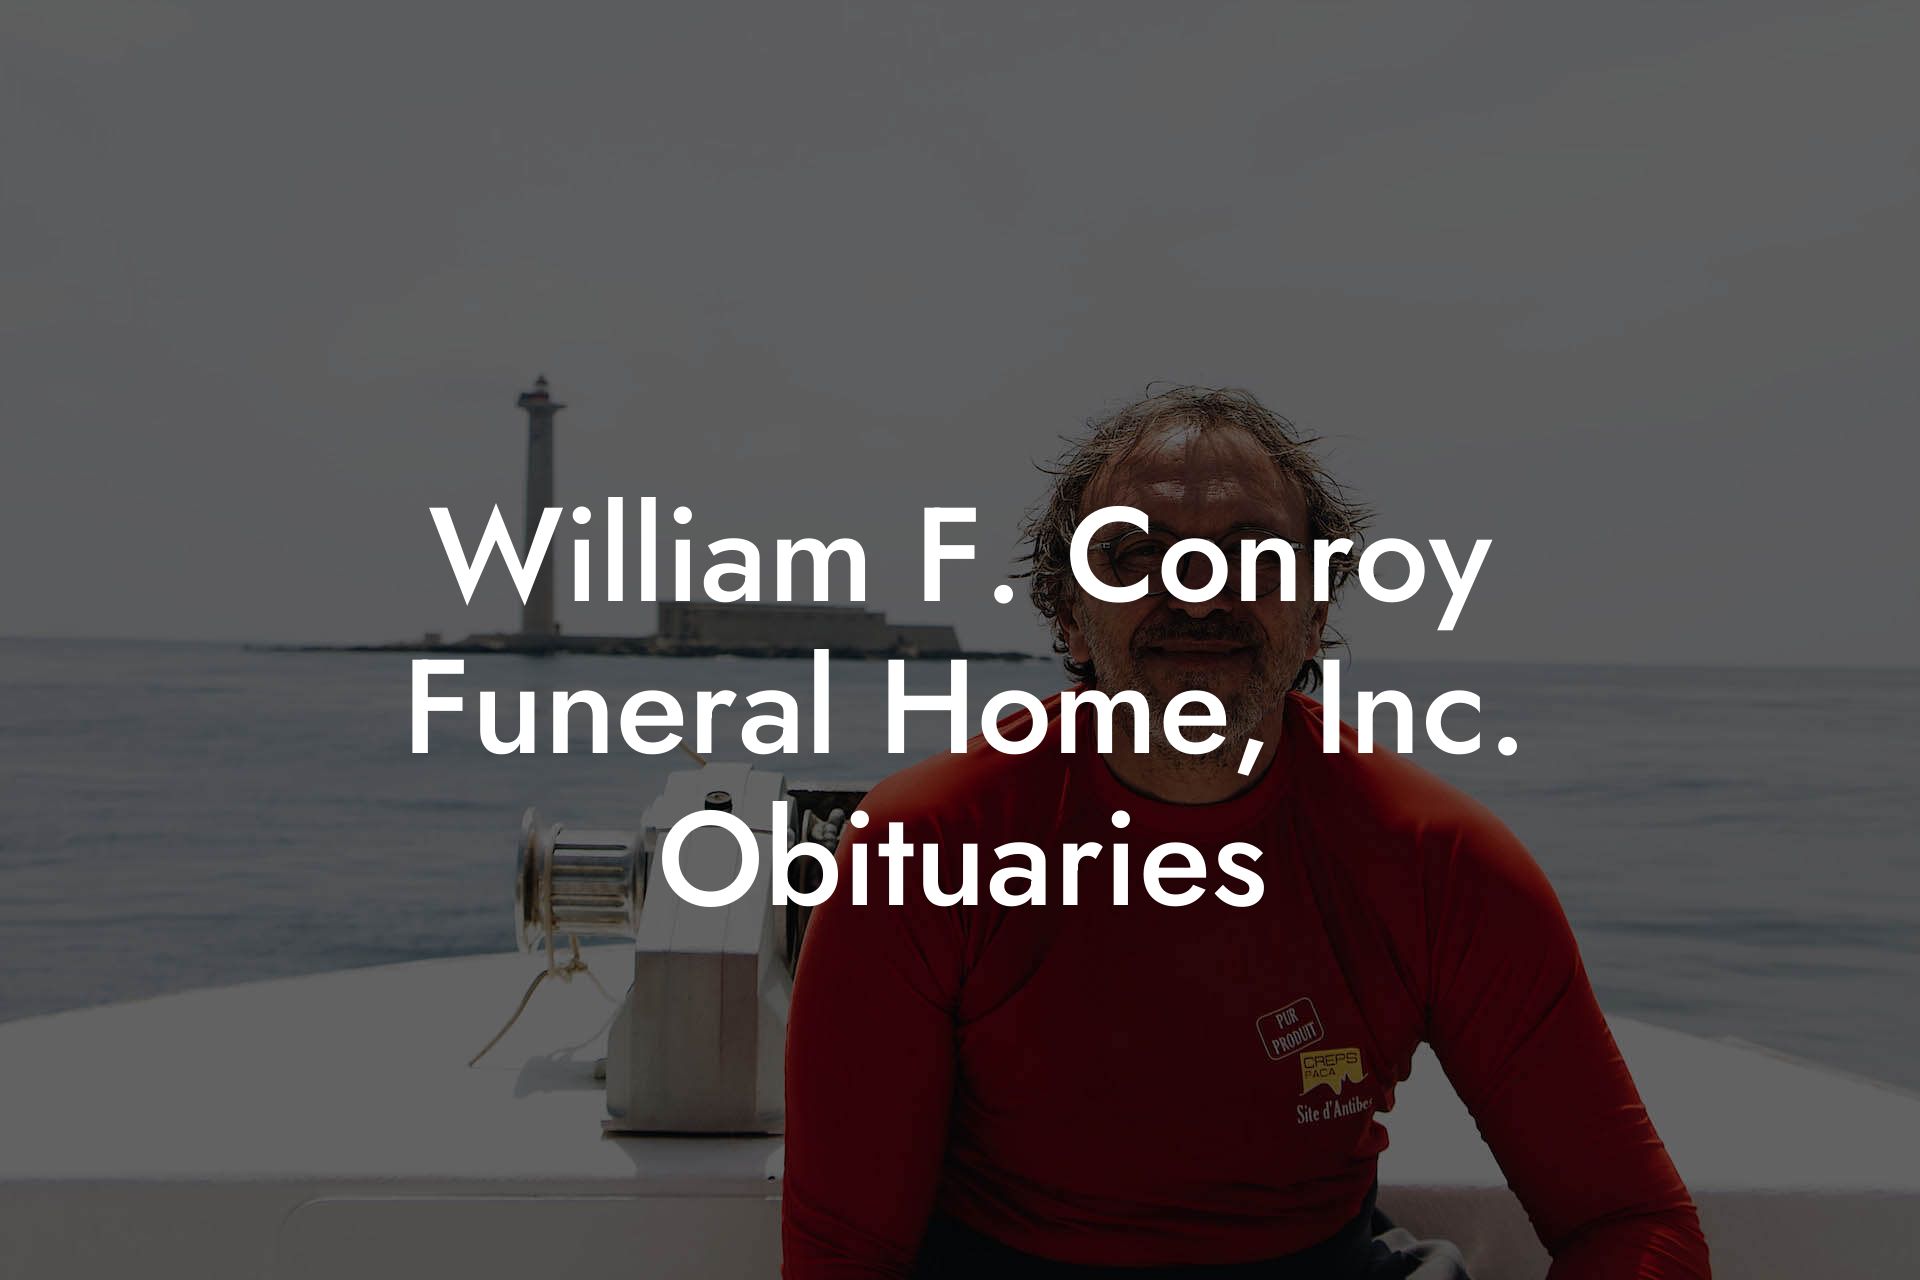 William F. Conroy Funeral Home, Inc. Obituaries